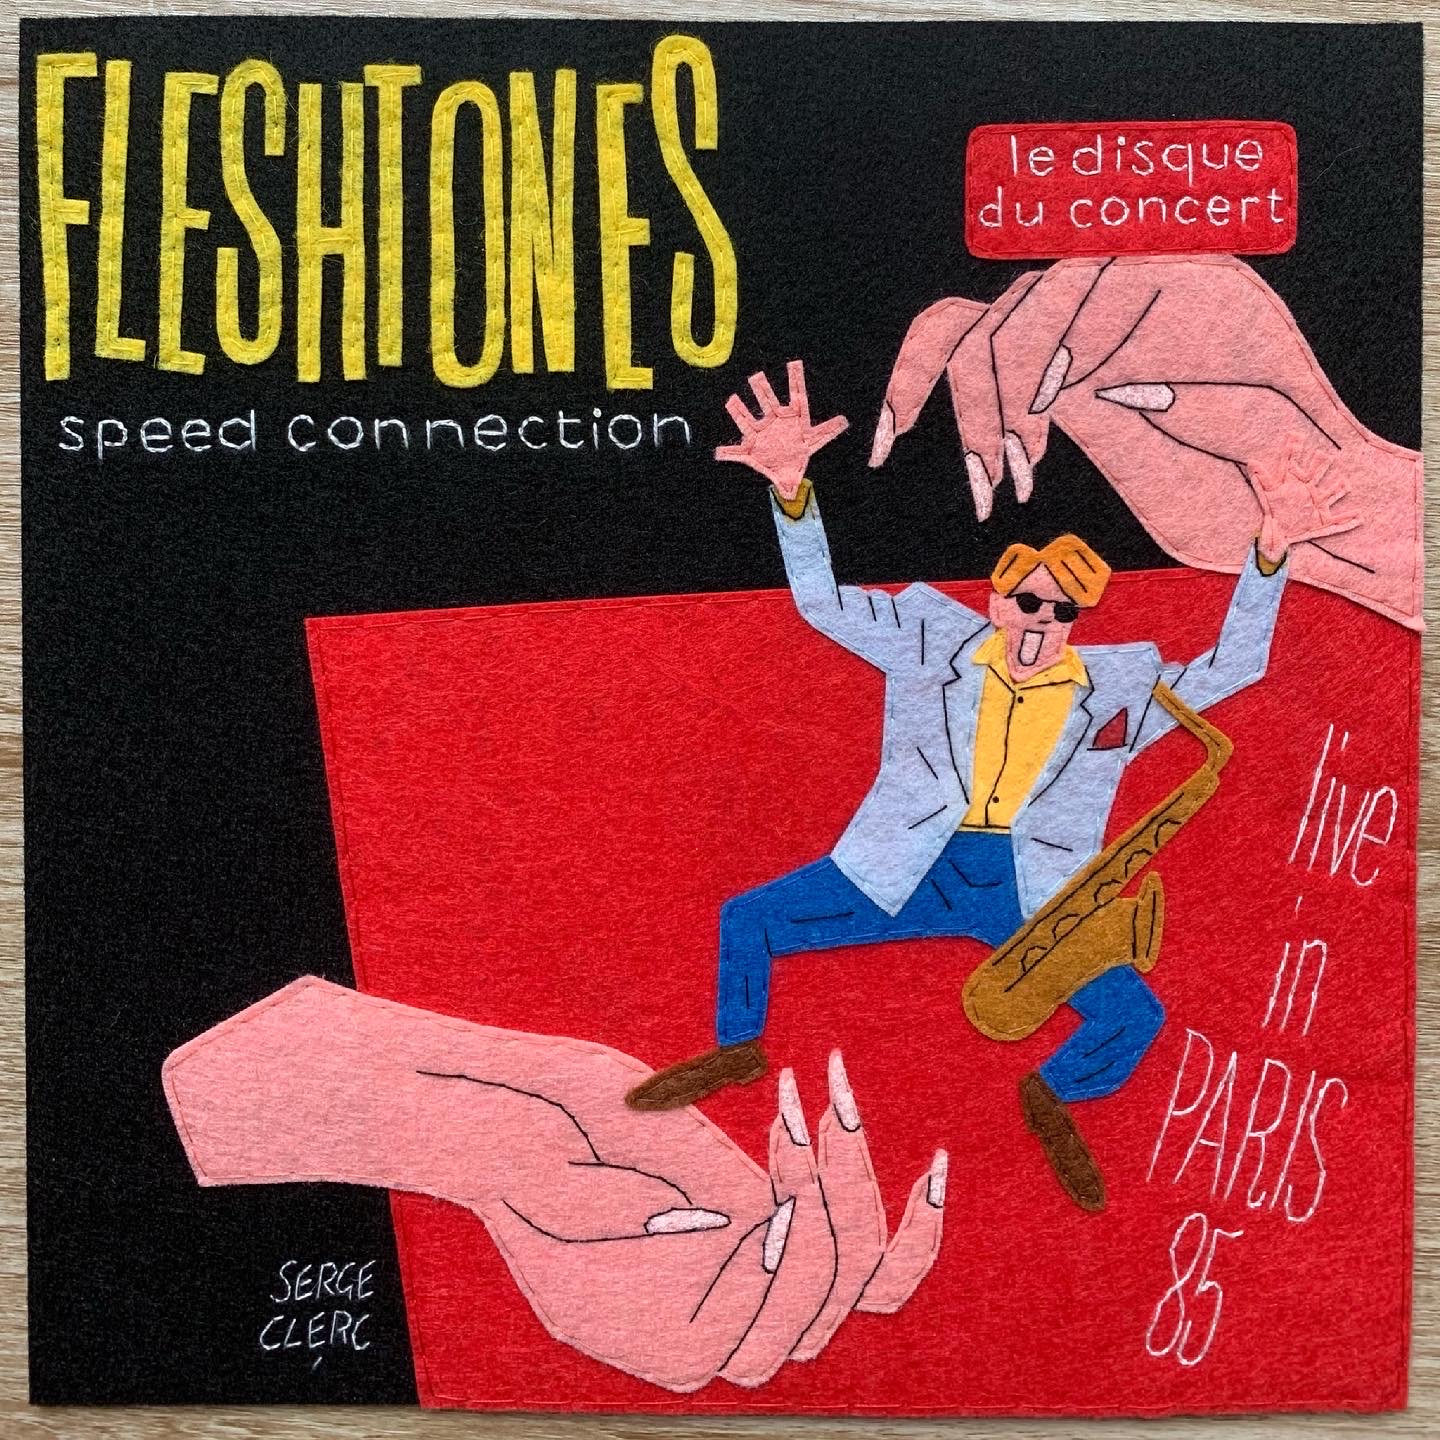 The Fleshtones – Speed Connection Live in Paris 85 (1985)